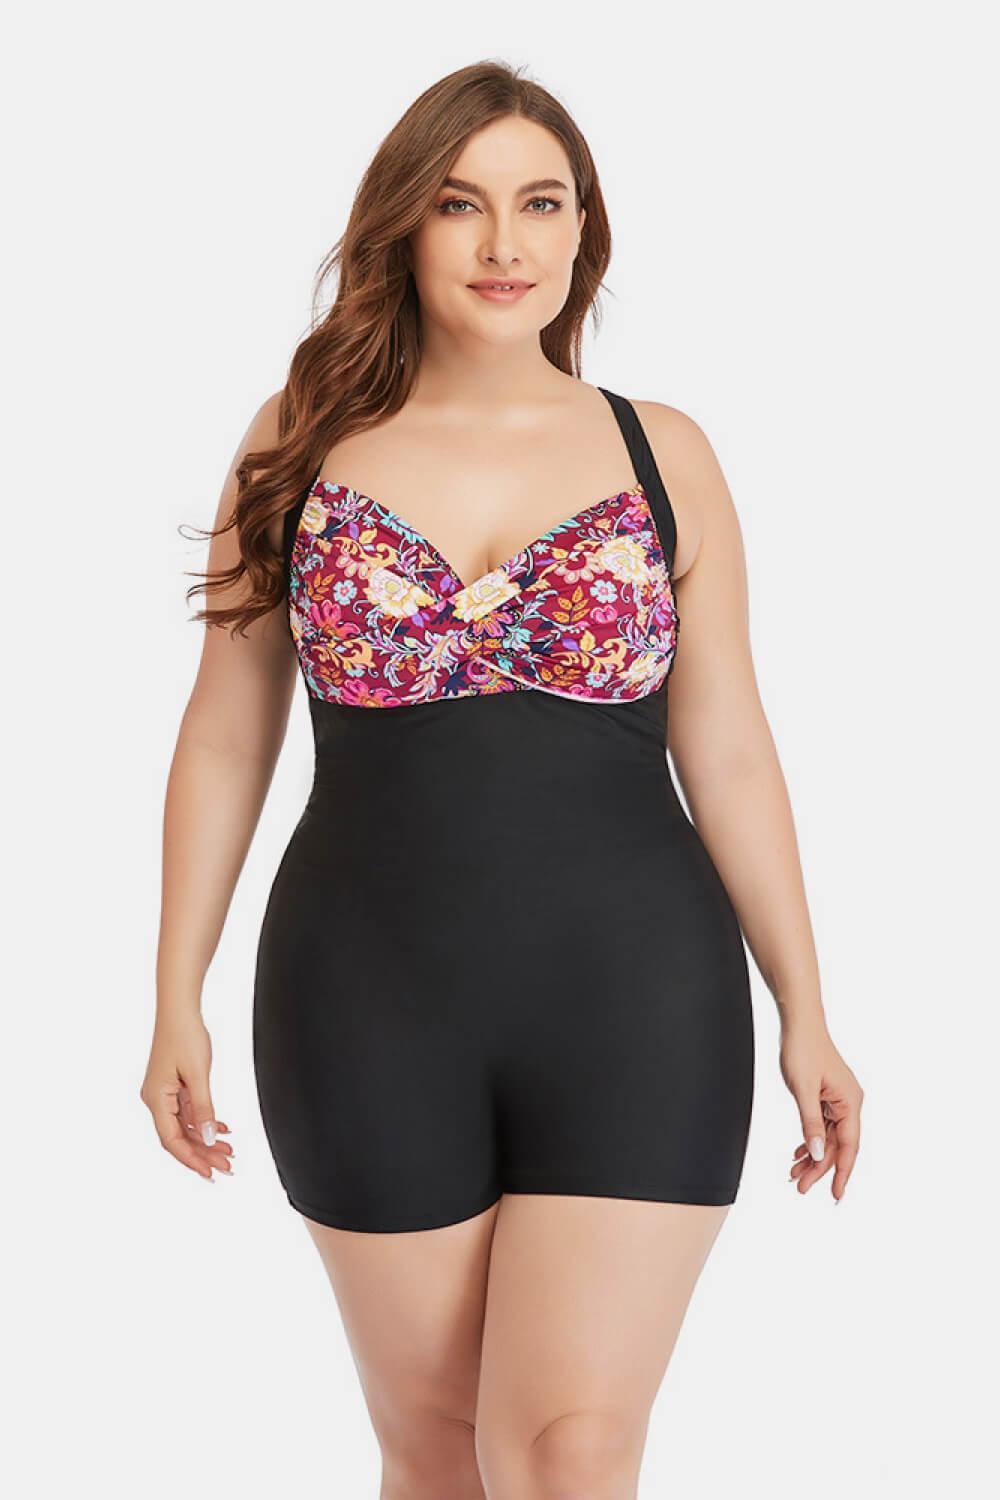 Plus Size Flattering Fit One-Piece Swimsuit - MXSTUDIO.COM